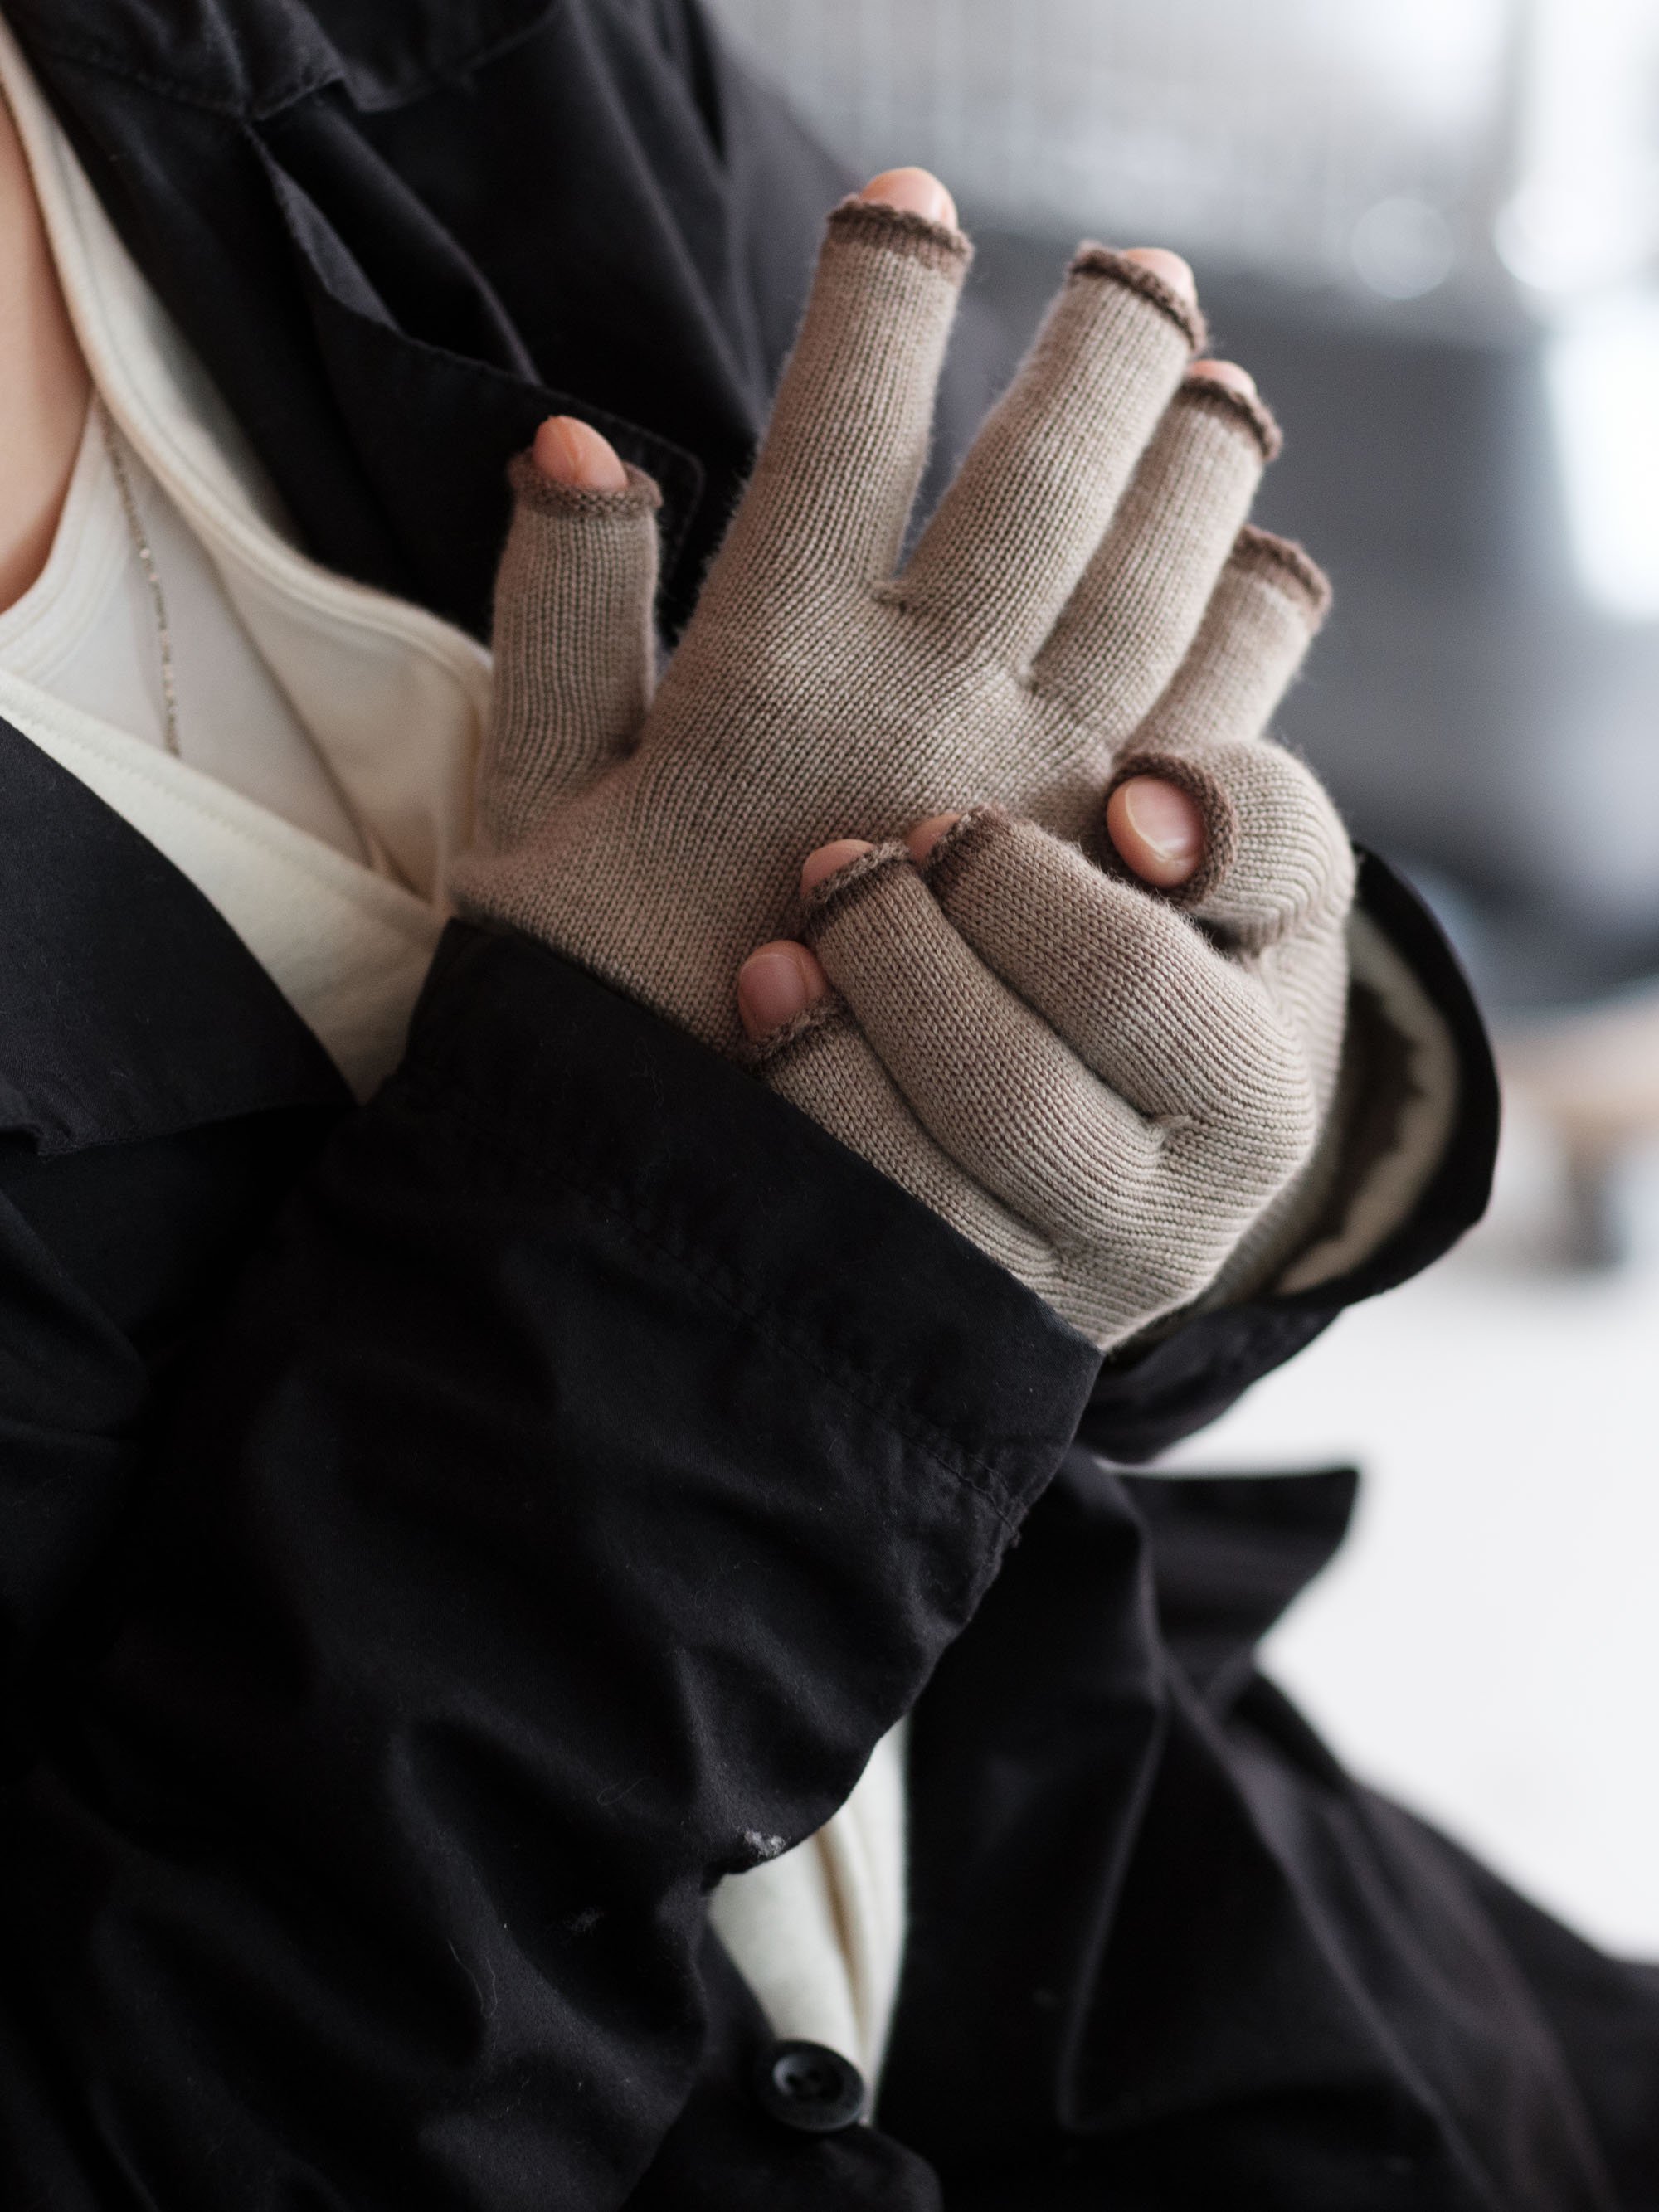 tet workers glove